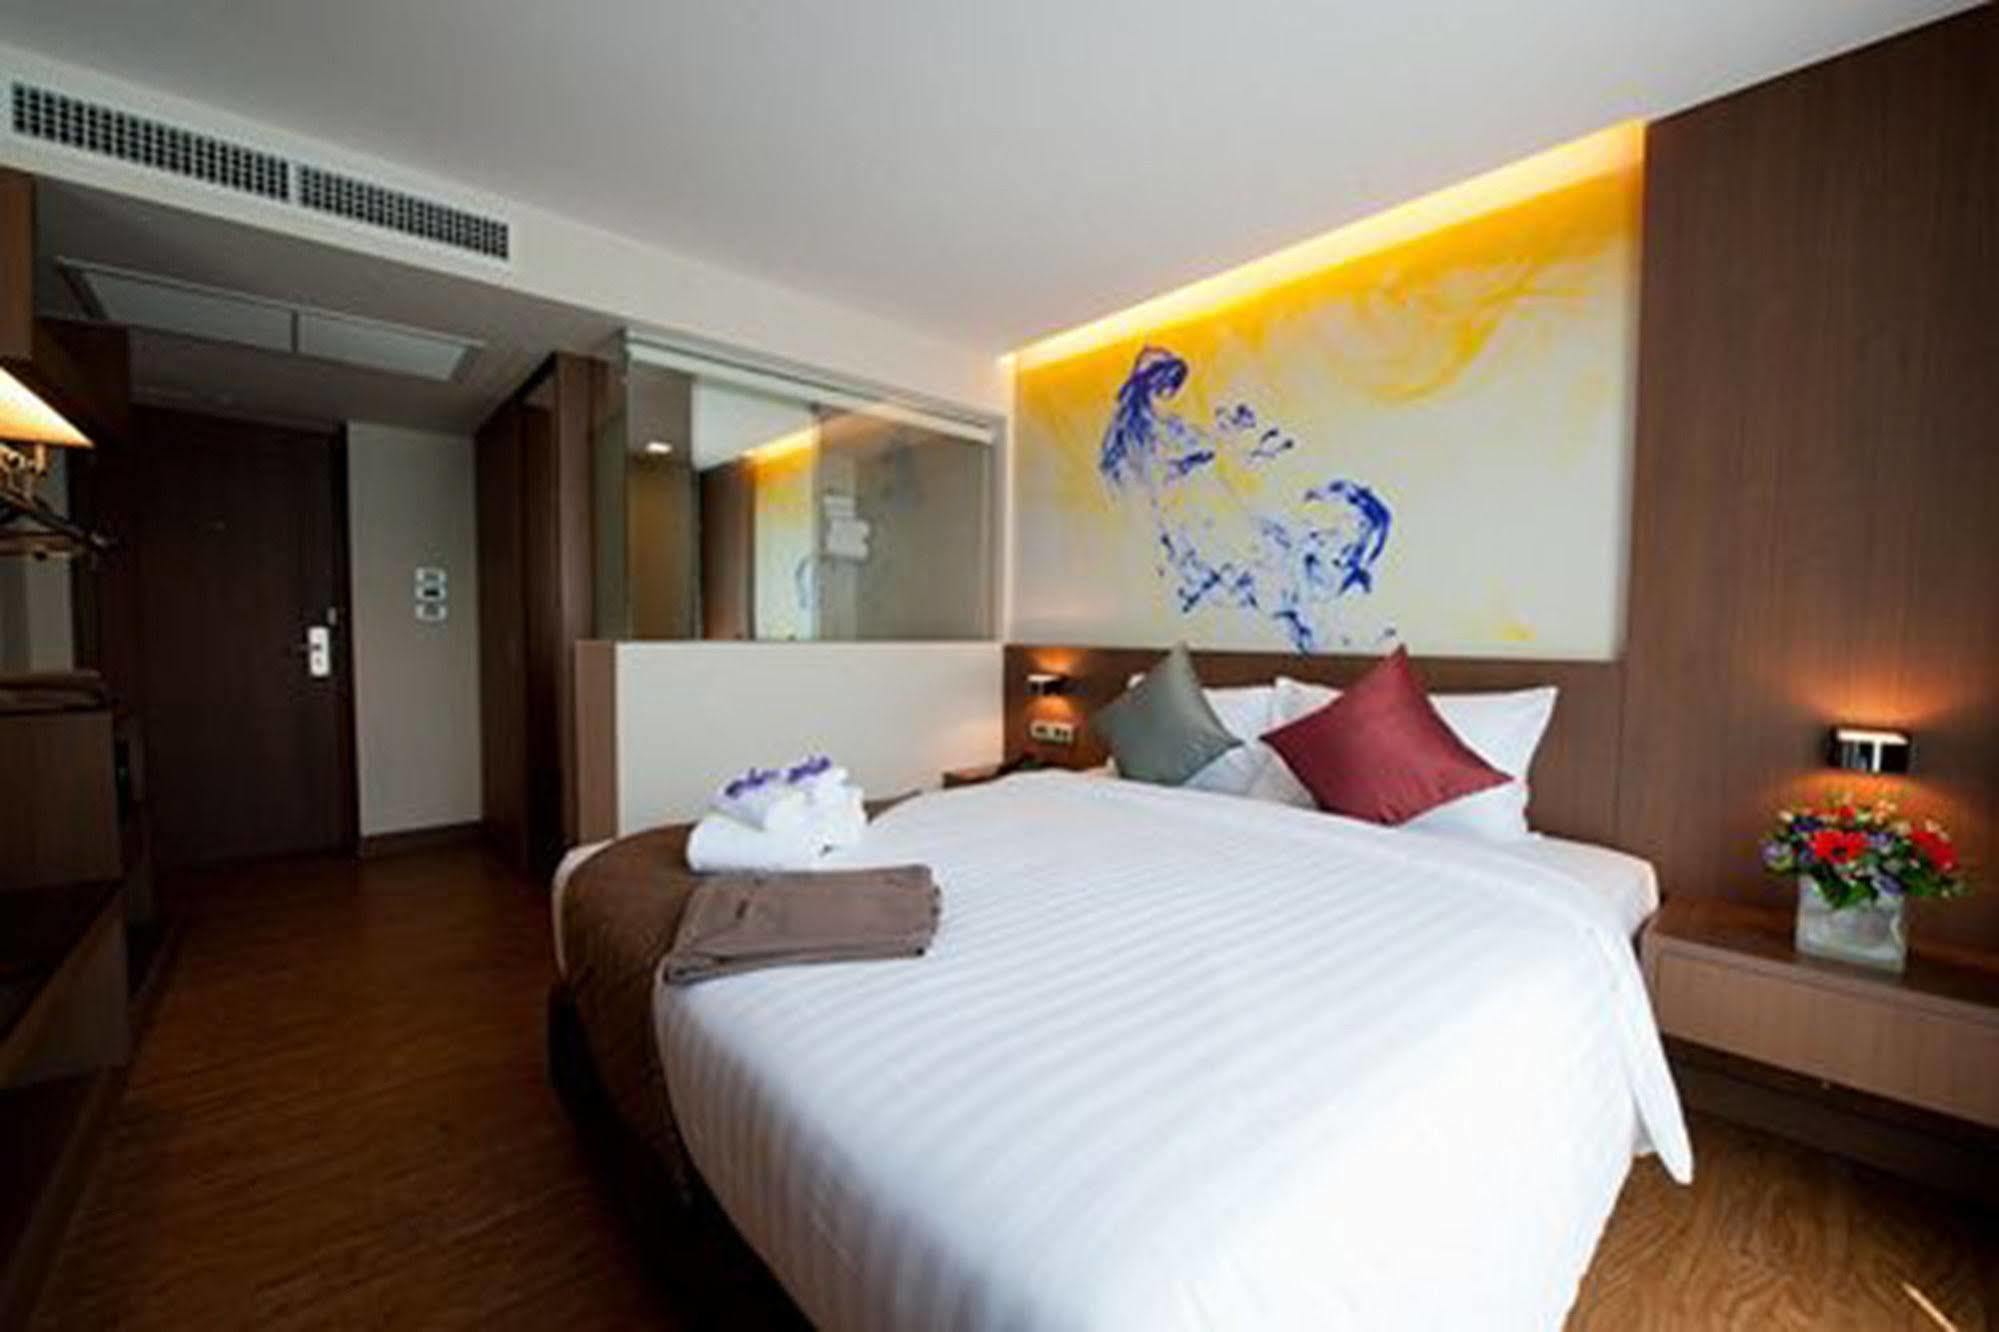 41 Suite Bangkok Exterior photo